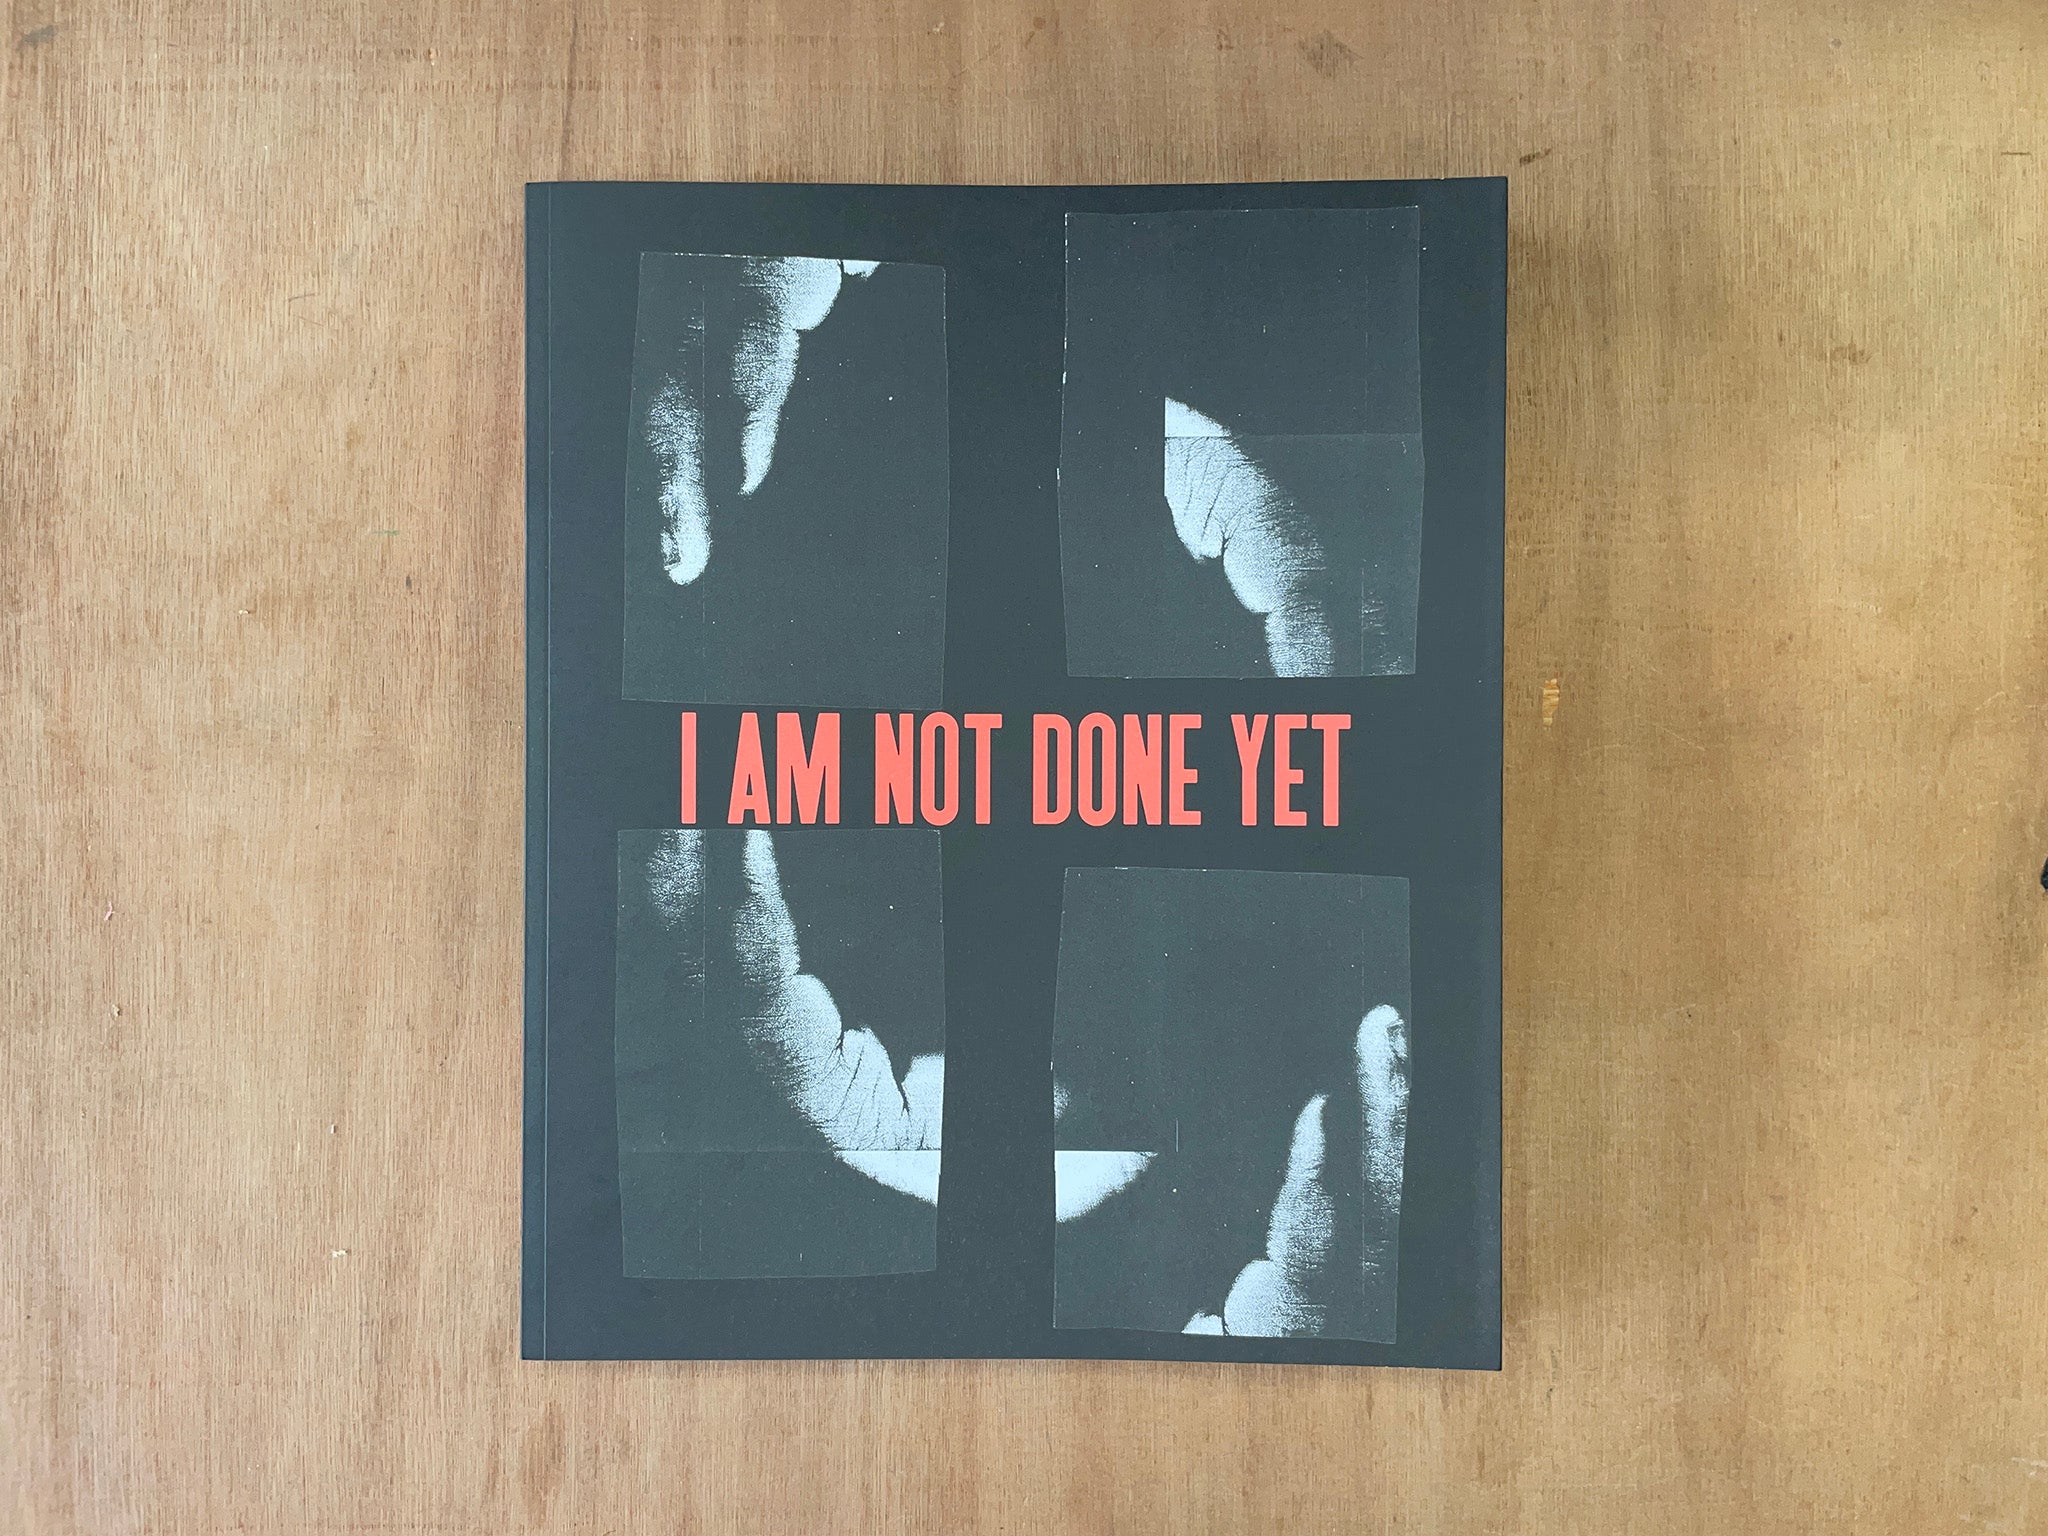 I AM NOT DONE YET by Kameelah Janan Rasheed